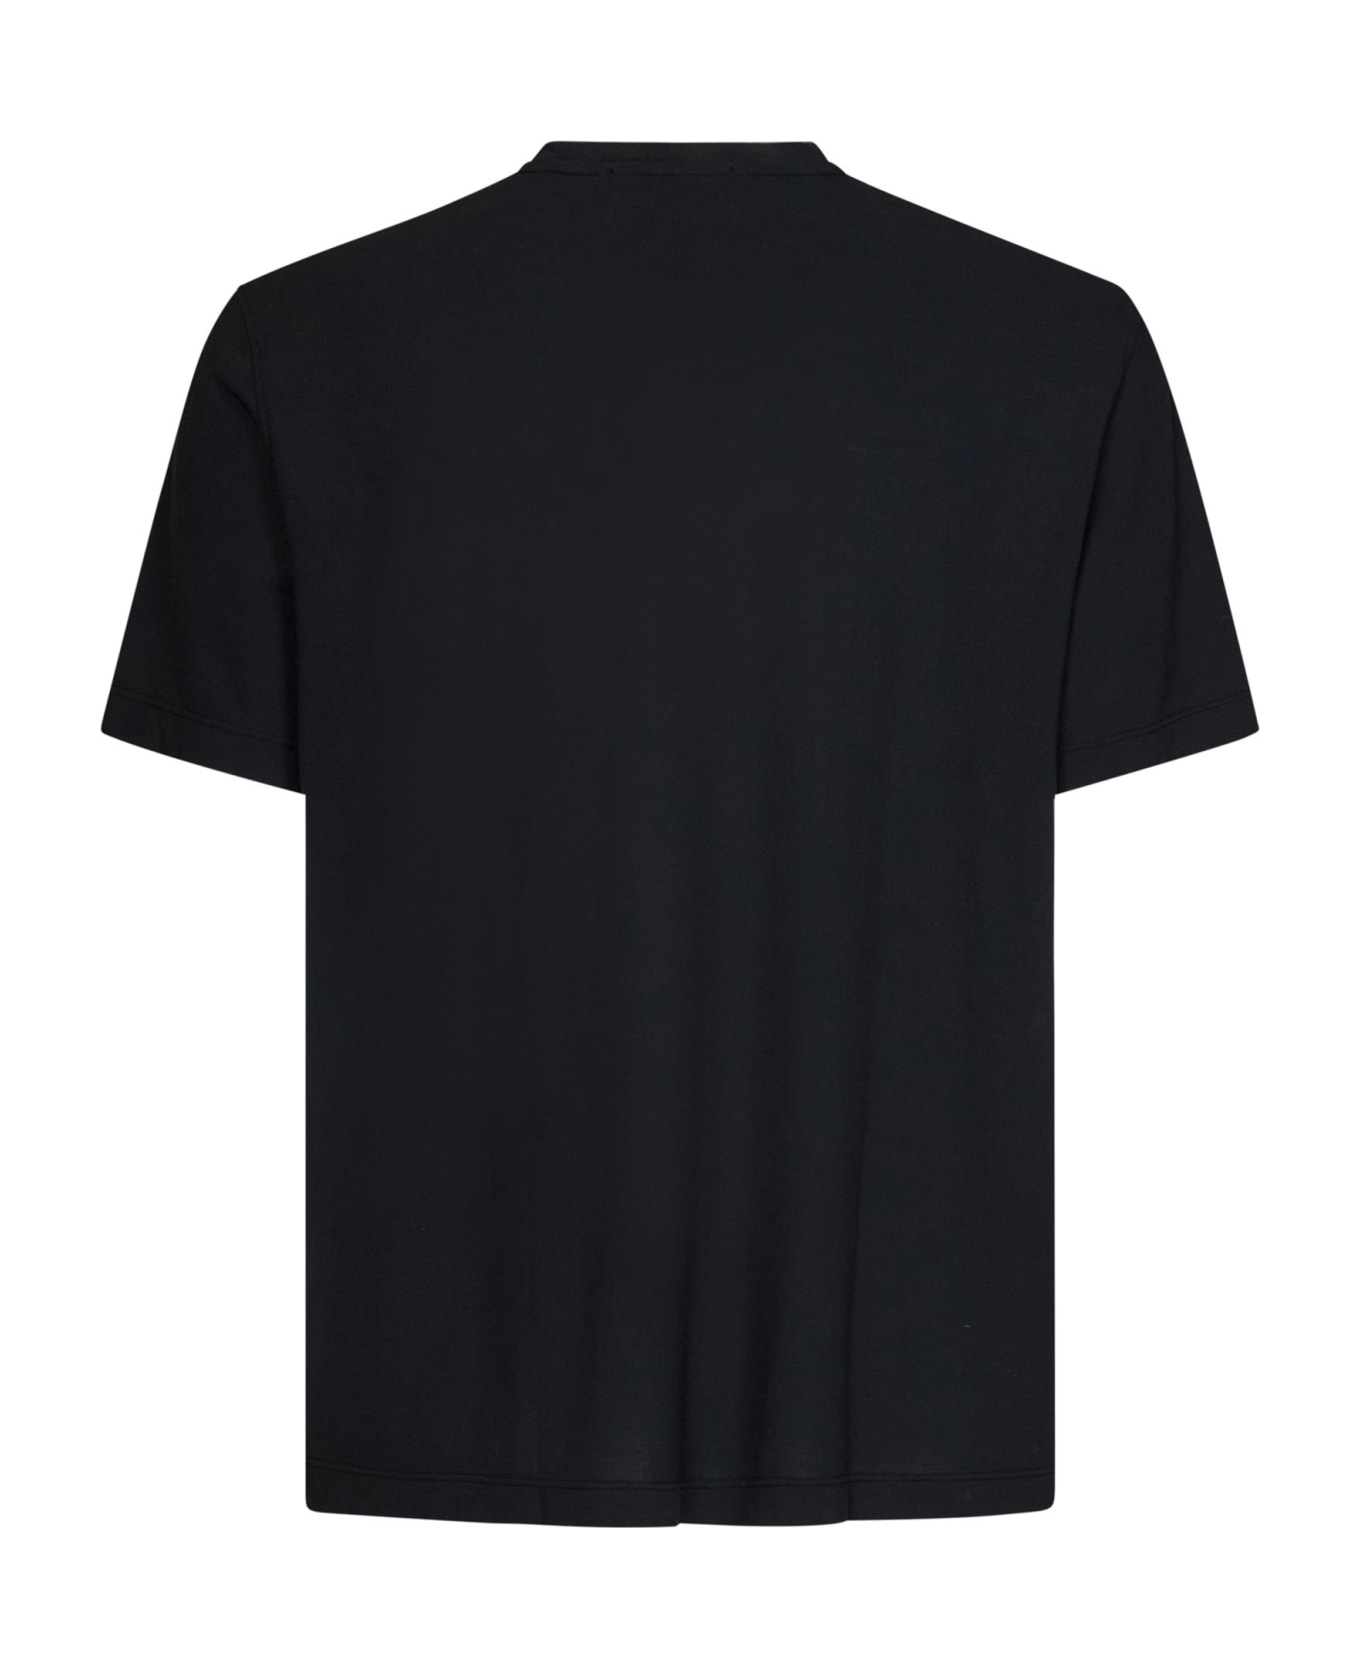 Drumohr T-shirt - Black